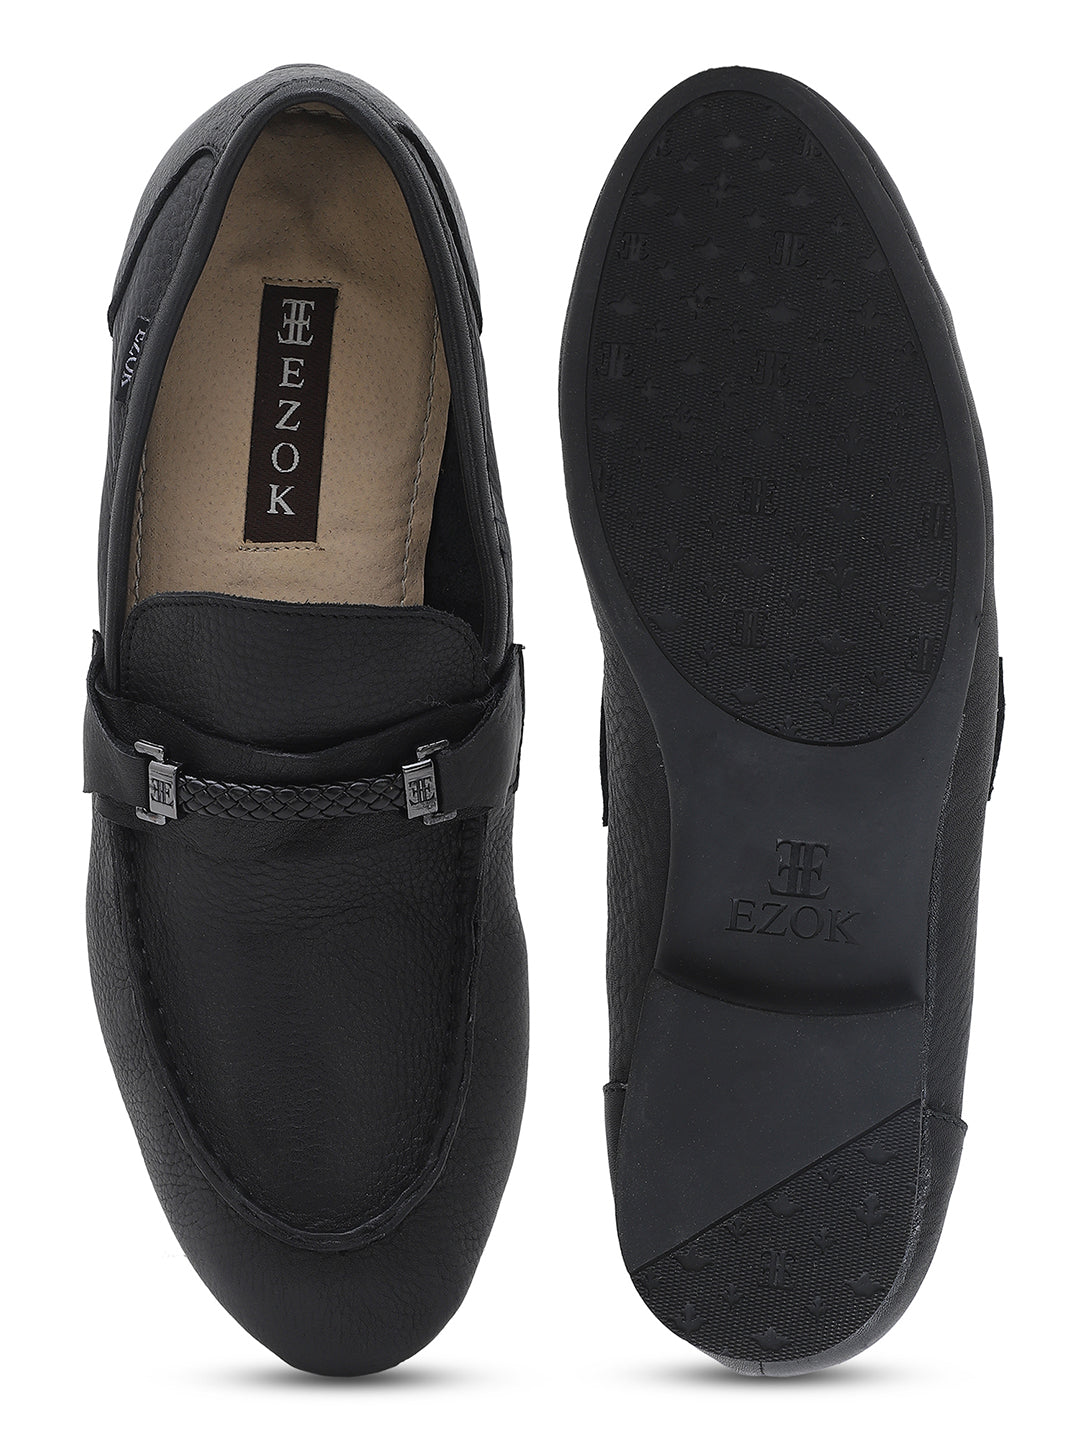 Ezok Mens Black Leather Semi Formal Shoes(3103)